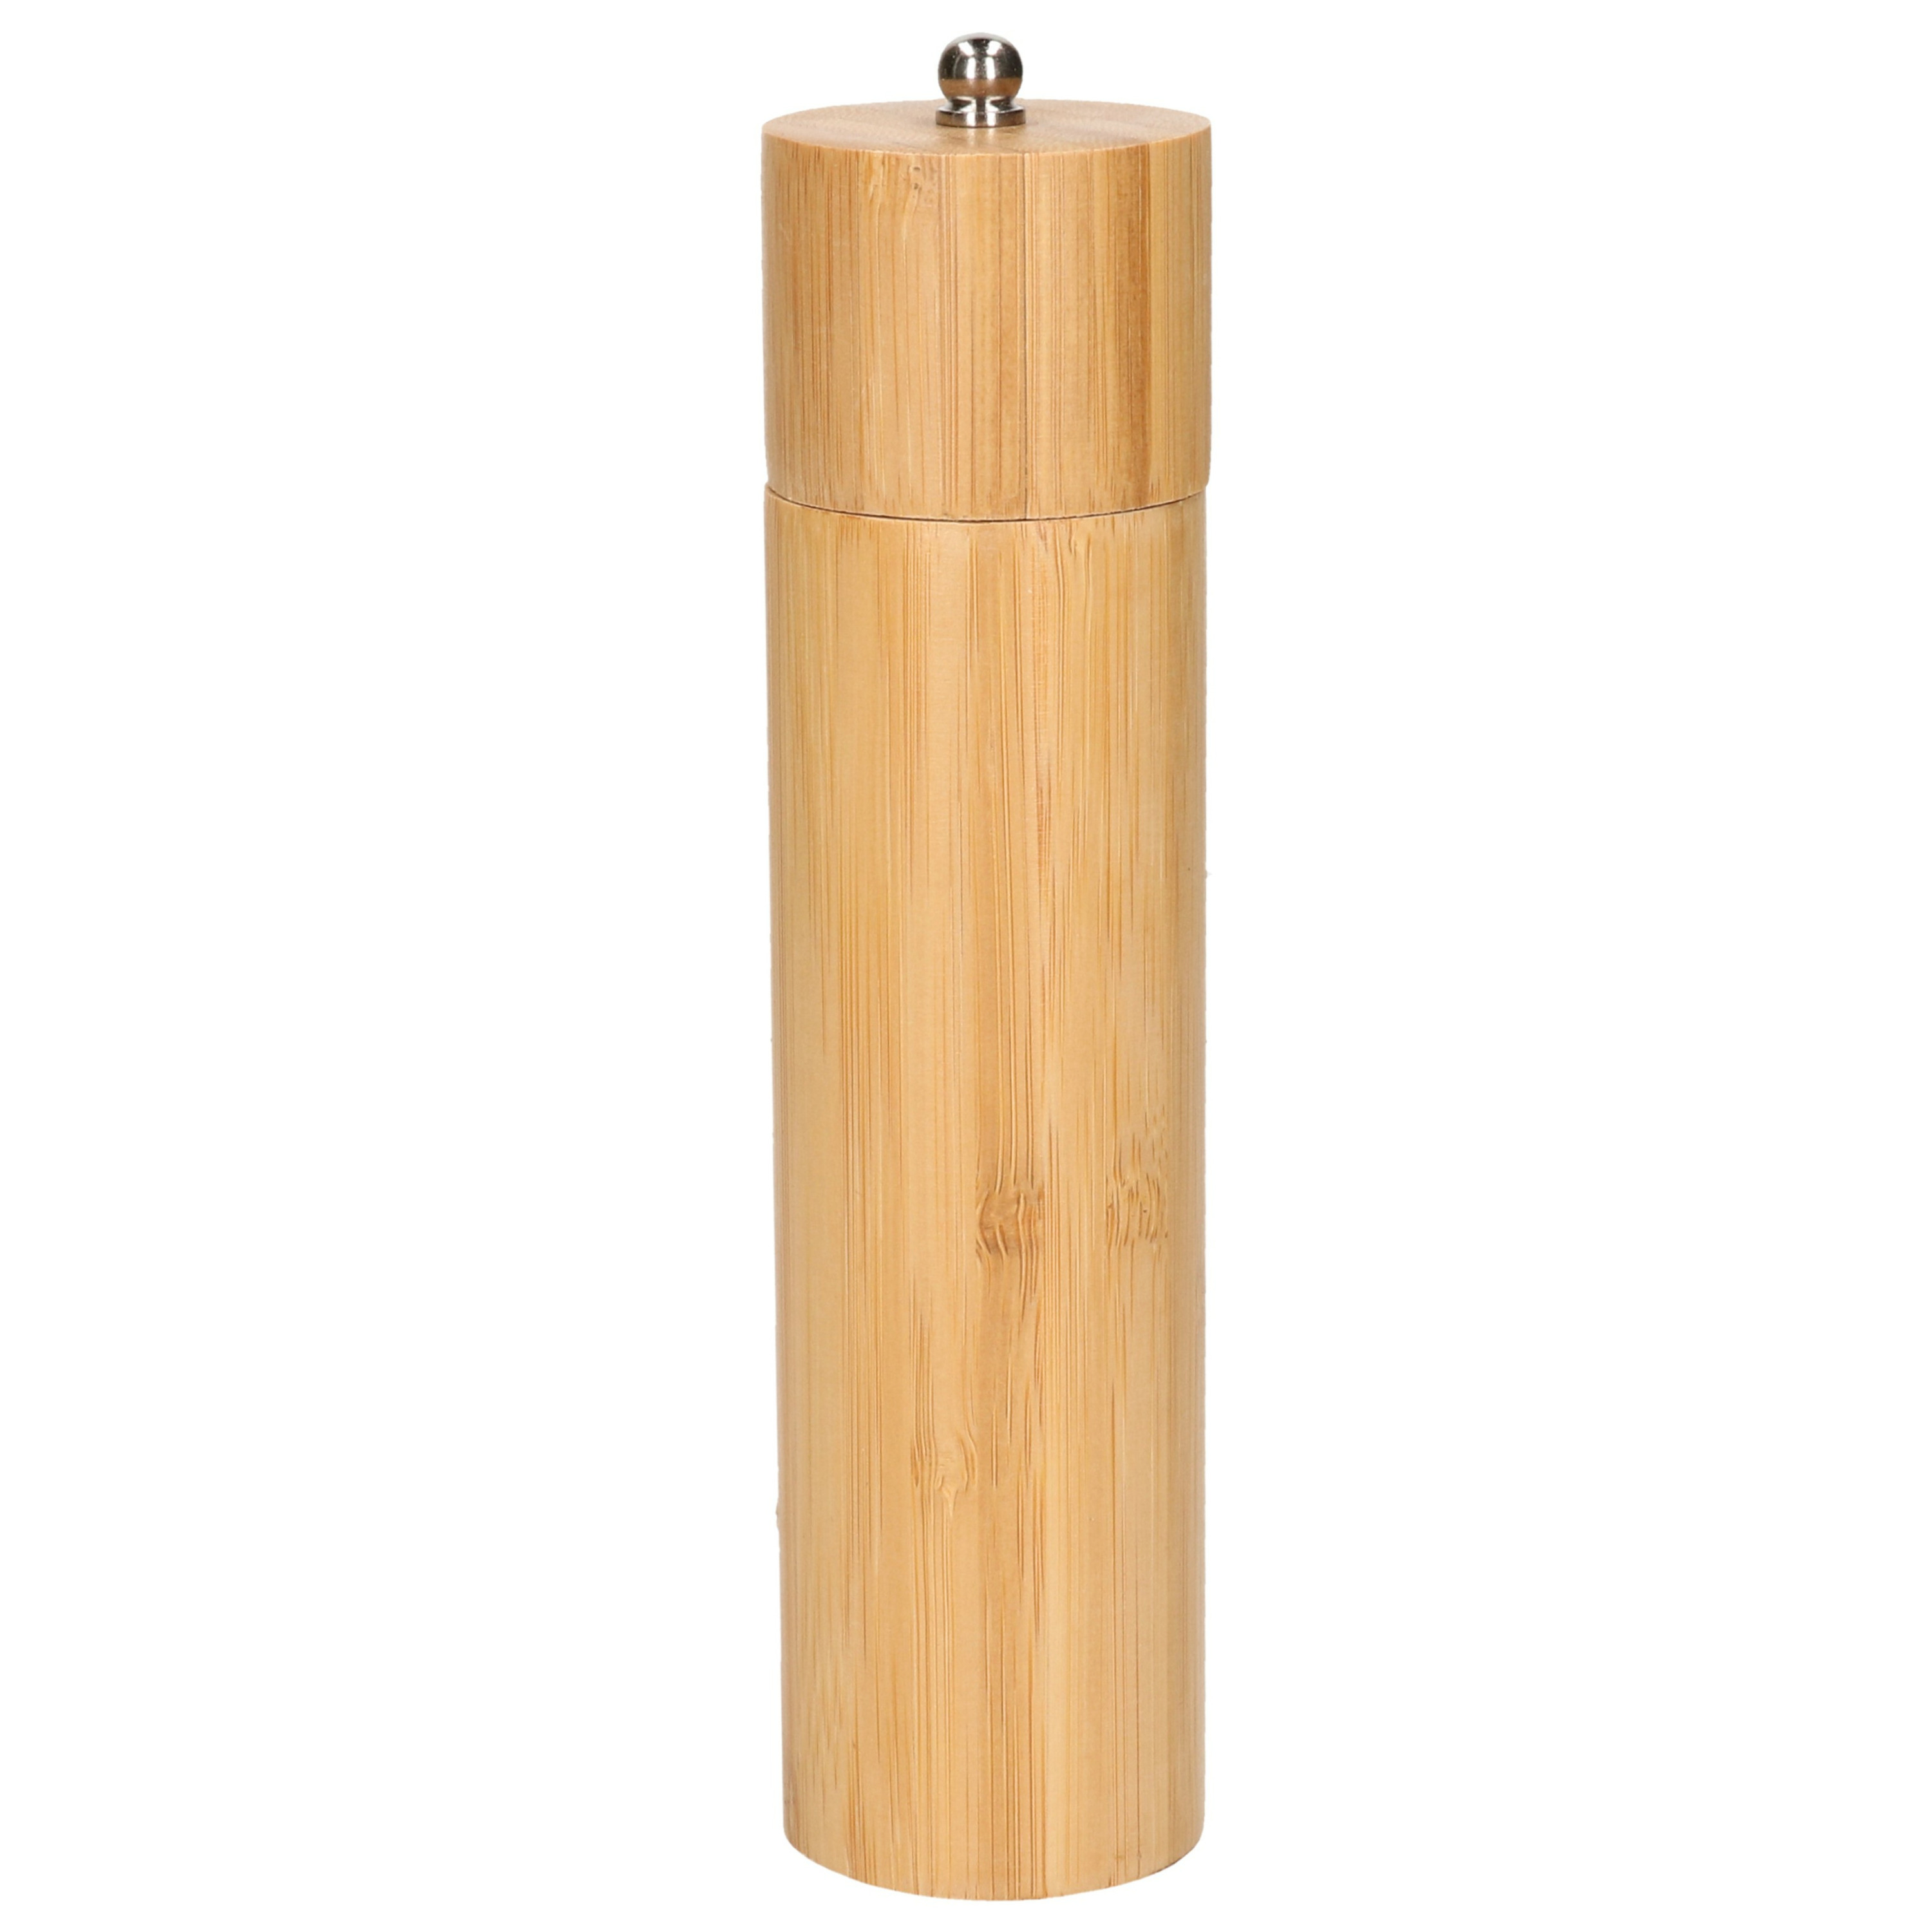 Pepermolen-zoutmolen bamboe hout beige 20 cm